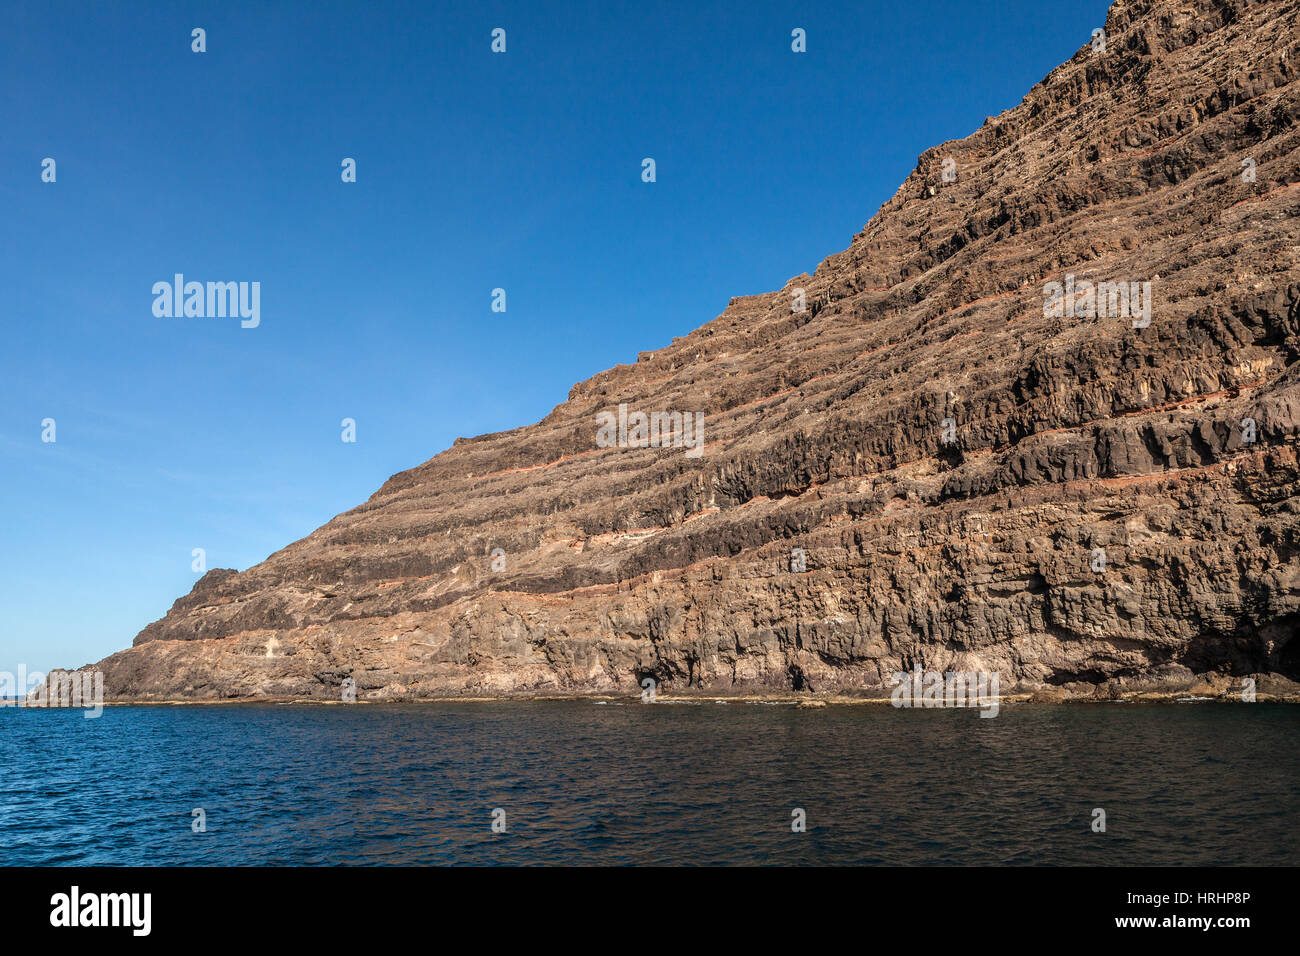 Famara cliffs in Lanzarote, Canary Islands, Spain Stock Photo